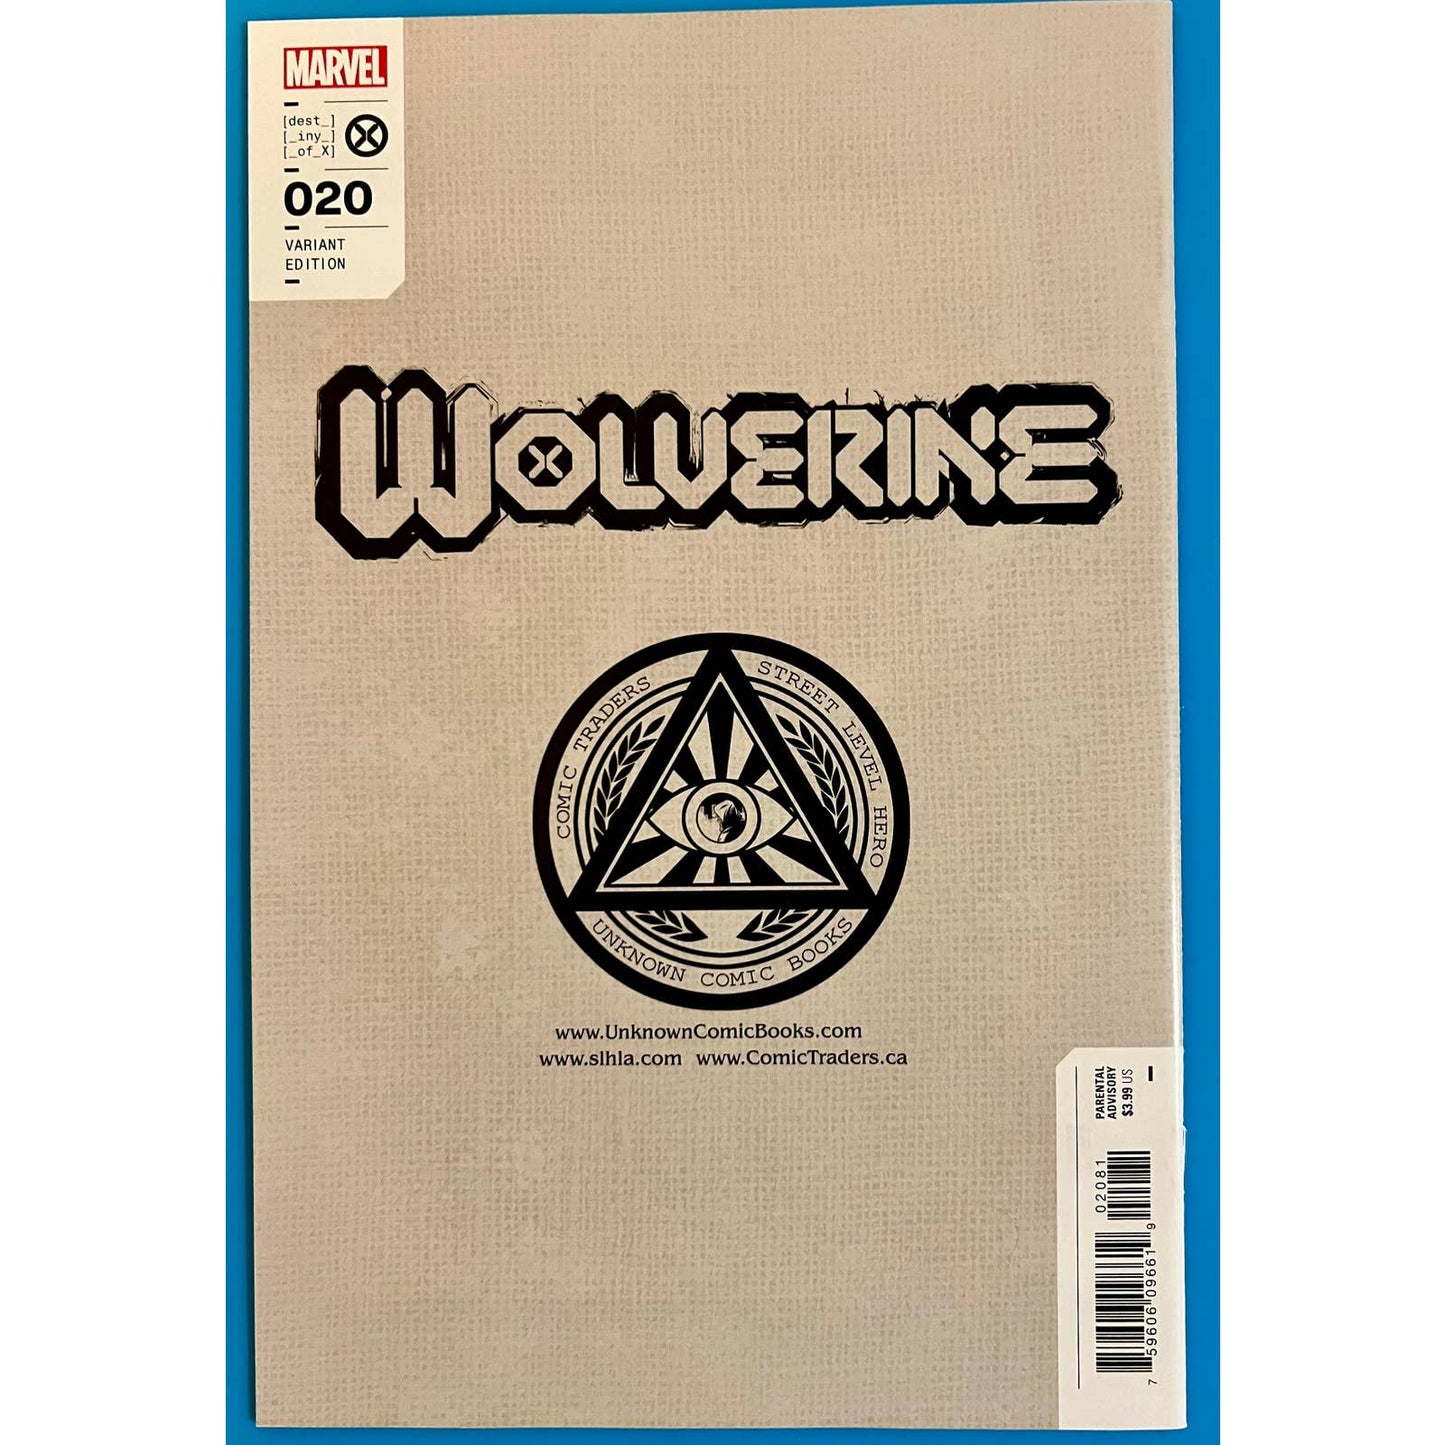 Wolverine #20G  Alan Quah Trade Dress 3000 copies Unknown Comic Books Variant